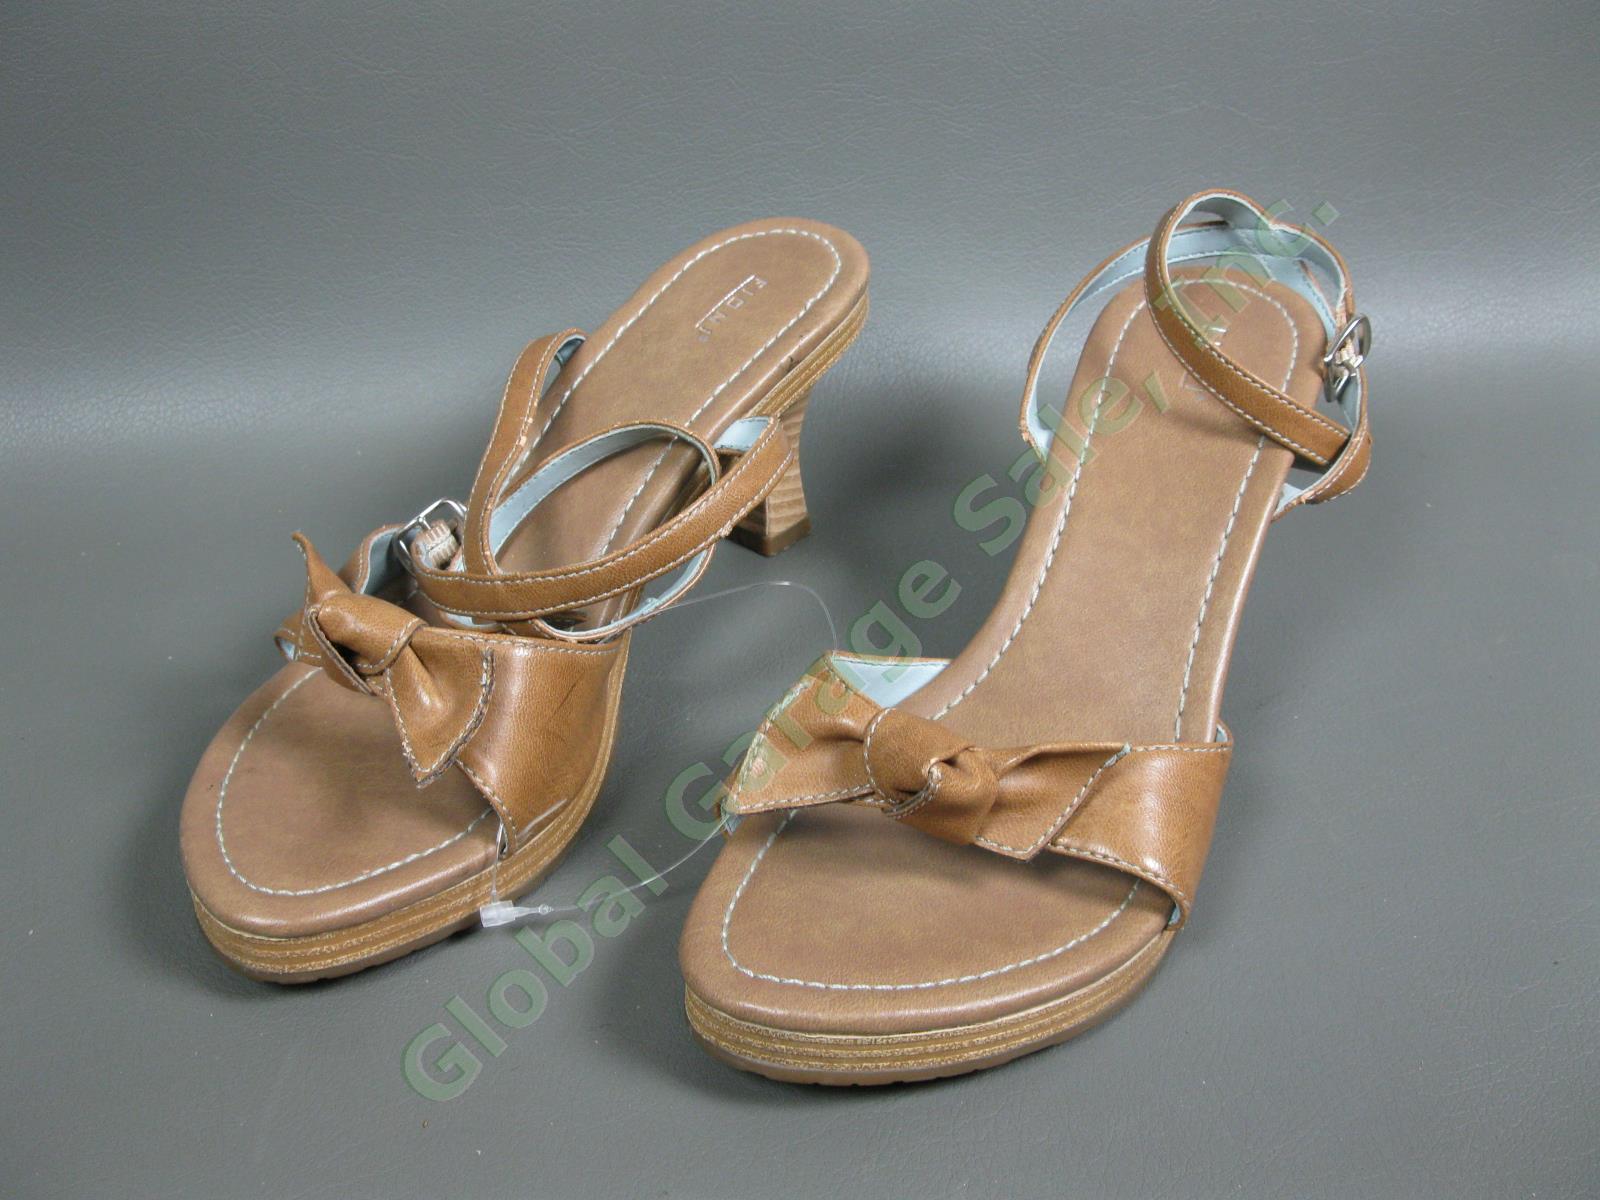 7 Pair Womens Leather Canvas Summer Sandal High Heel Size 6-10 Dress Shoe Lot 4